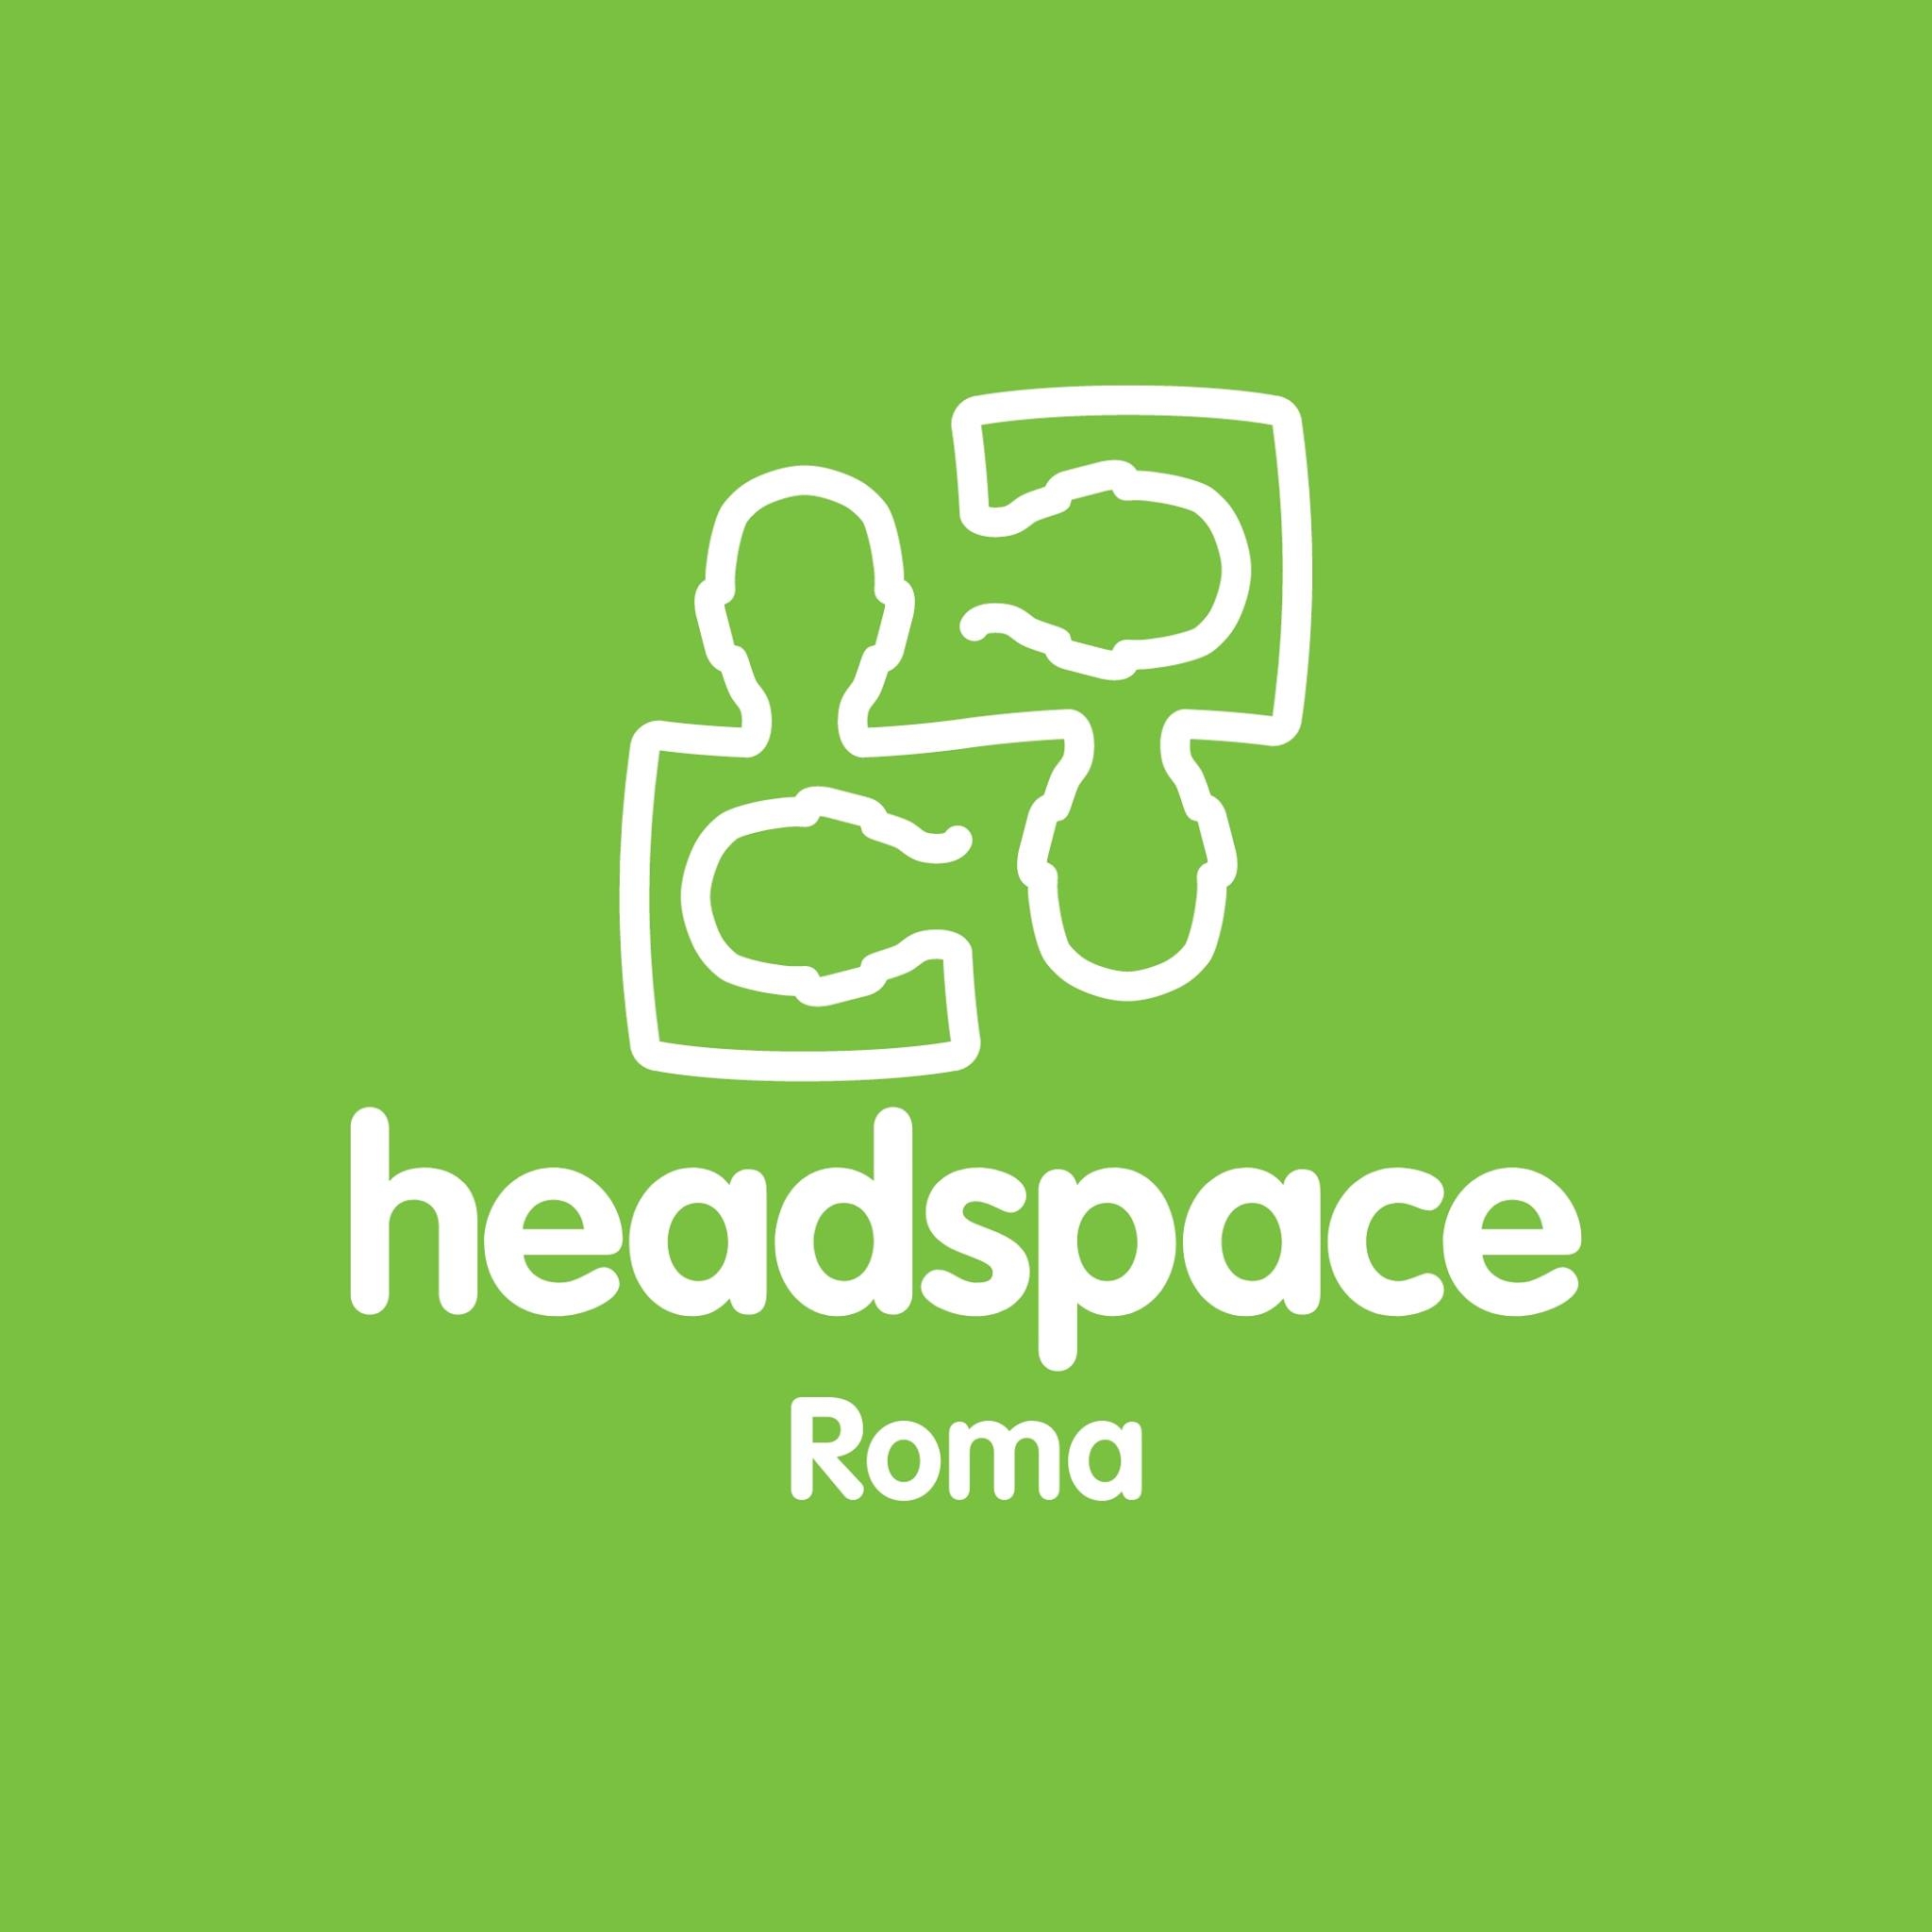 221218: headspace Roma – 59 Arthur Street – Christmas Arts with Kerry and Rheanna